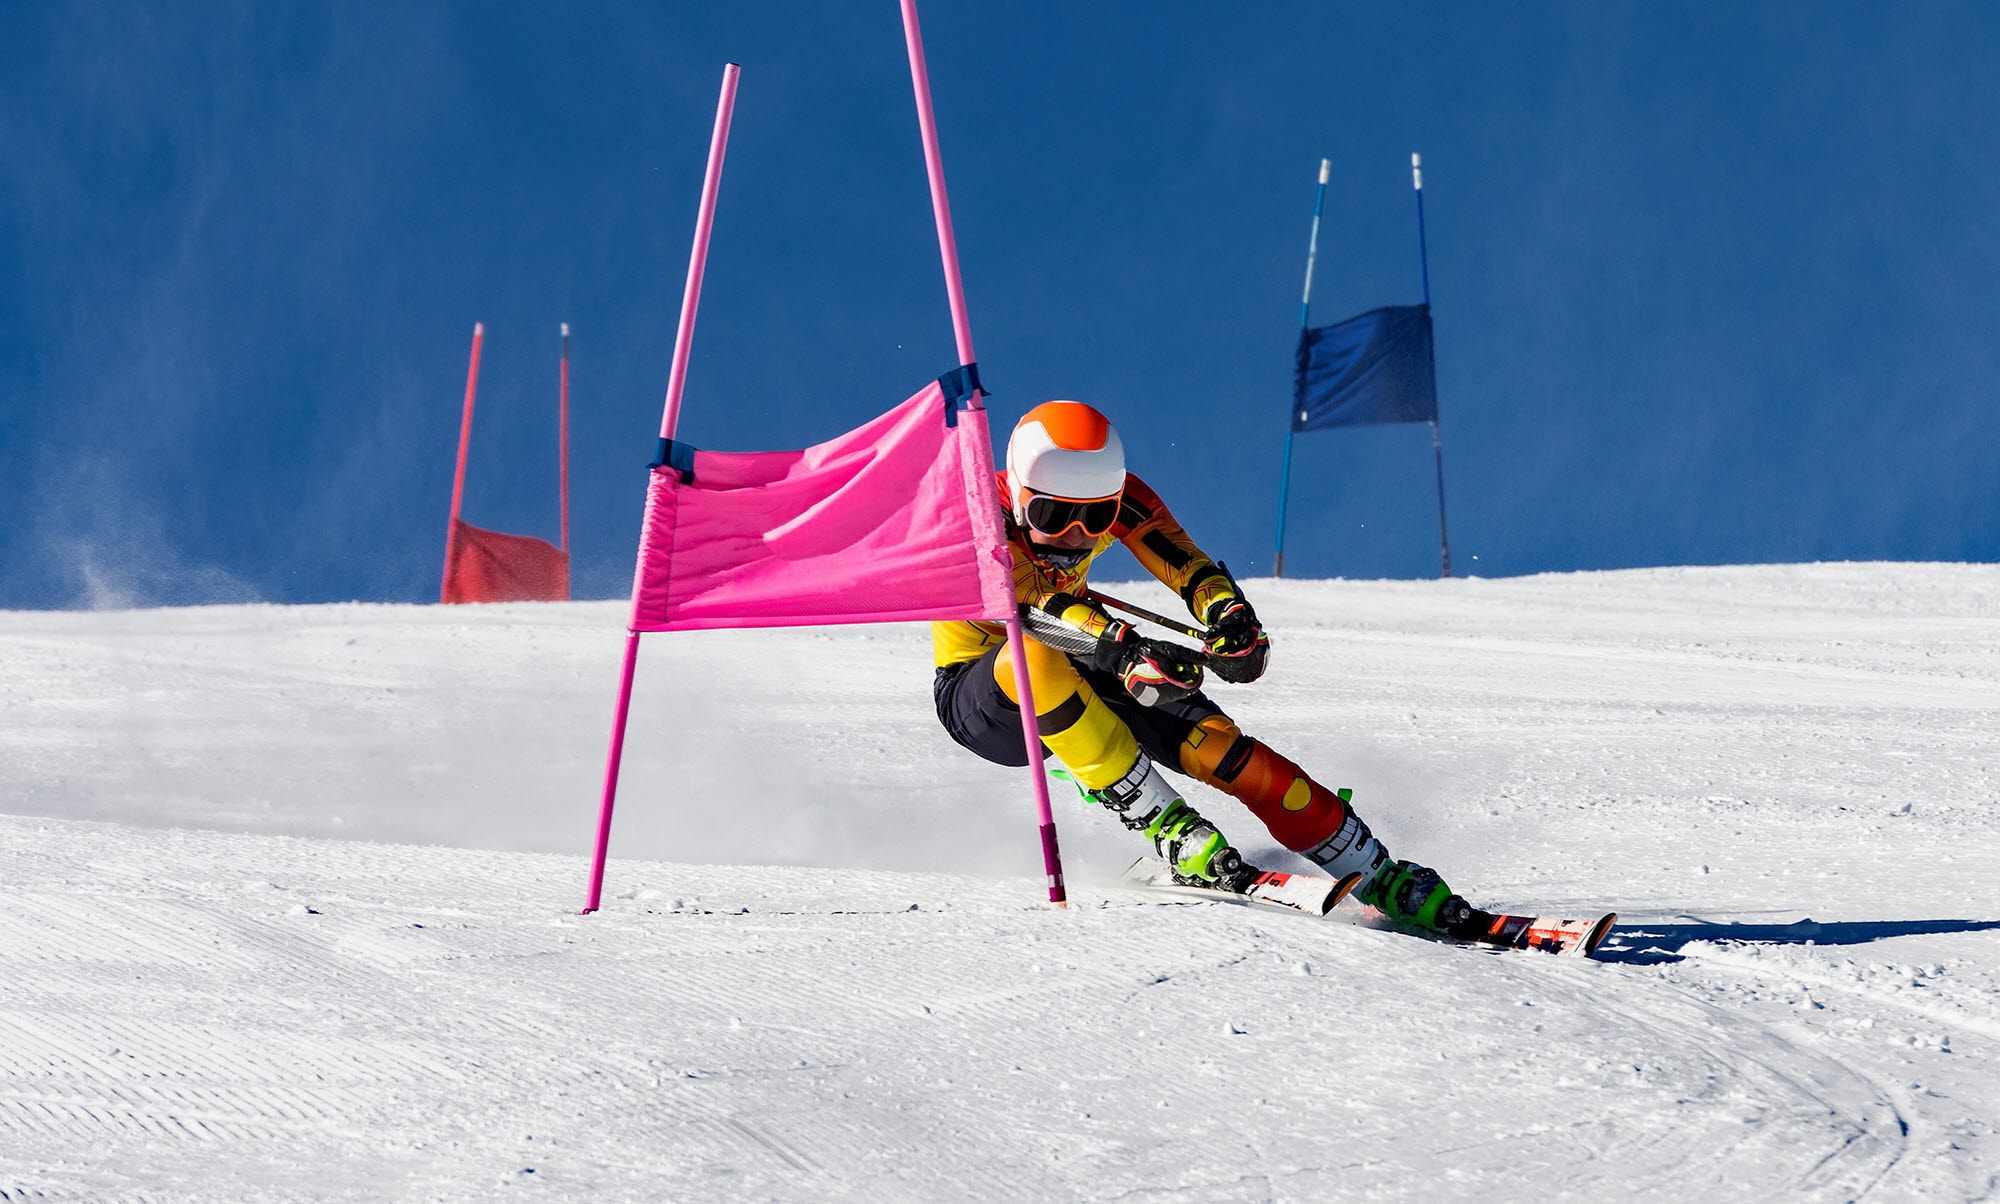 Downhill slalom ski competition